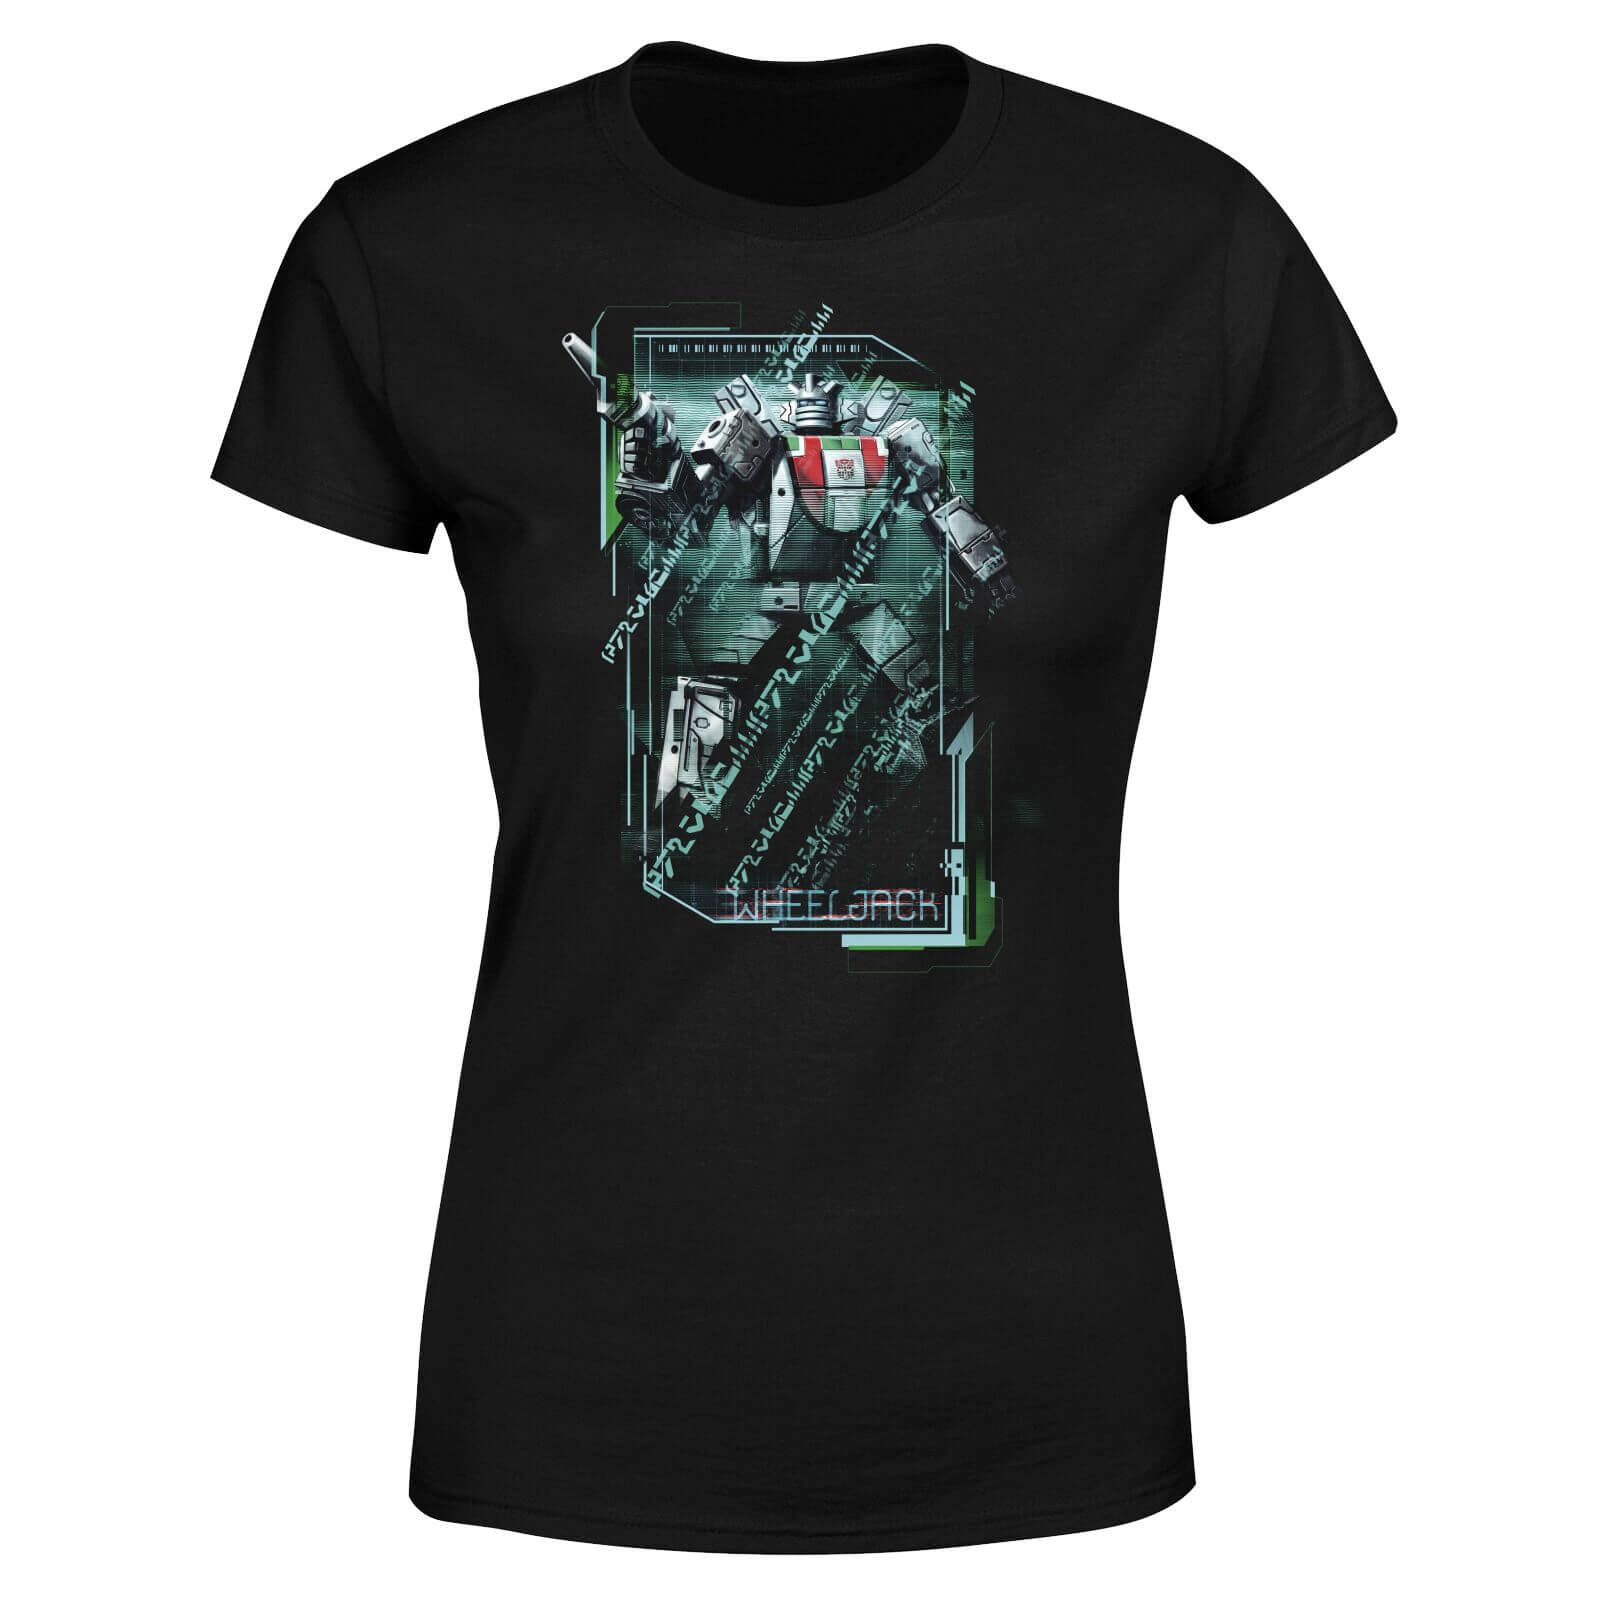 Transformers Wheeljack Tech Women's T-Shirt - Black - S - Black